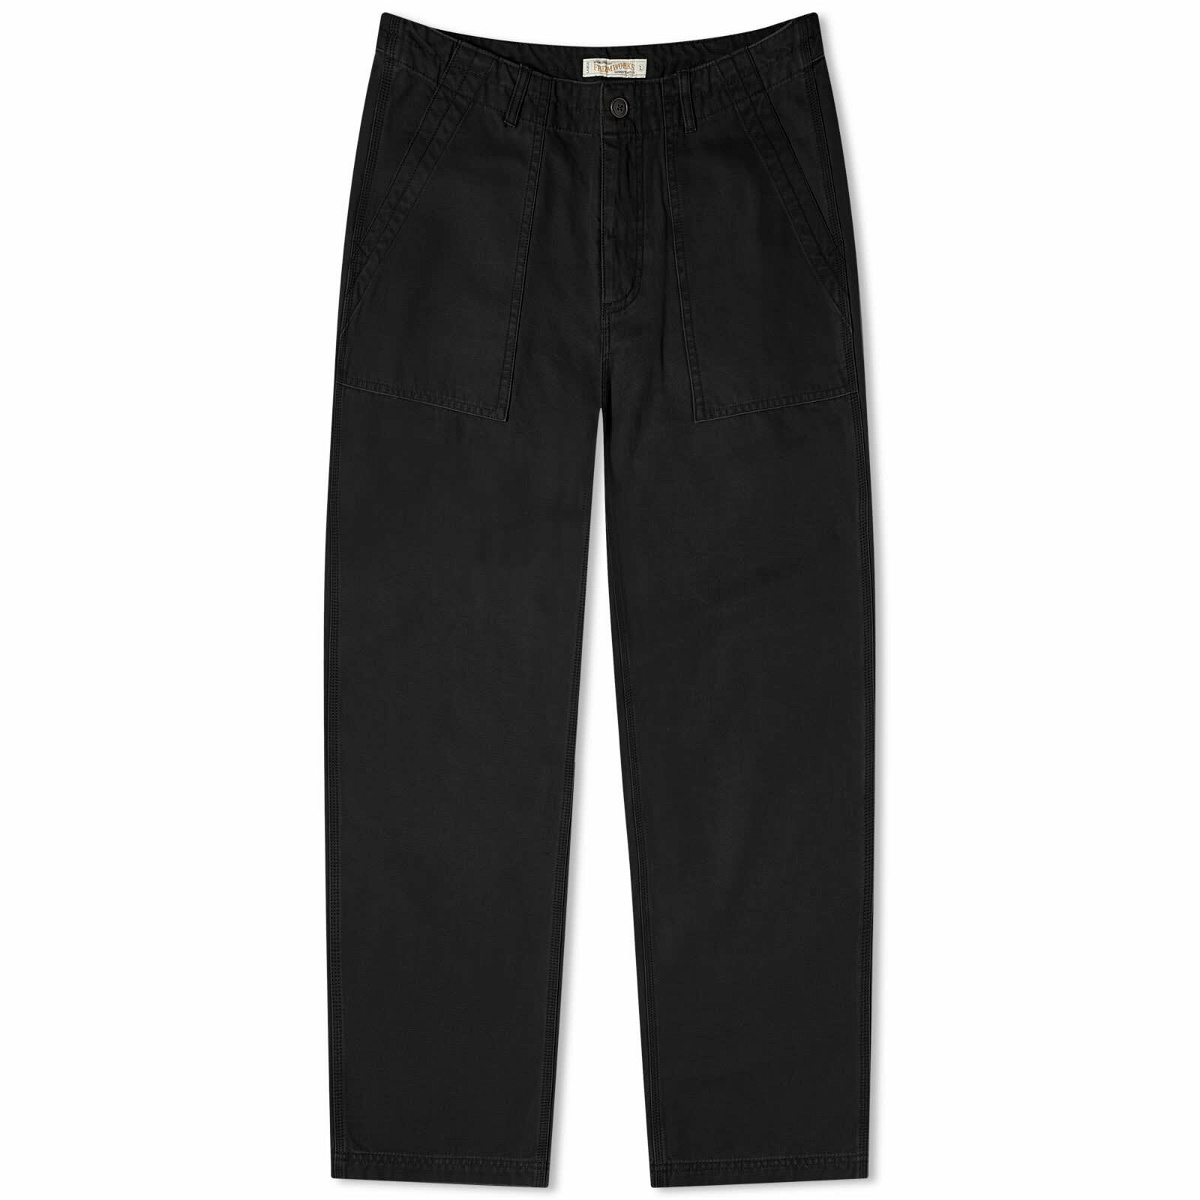 FrizmWORKS Men's Jungle Cloth Fatigue Trousers in Black FrizmWORKS